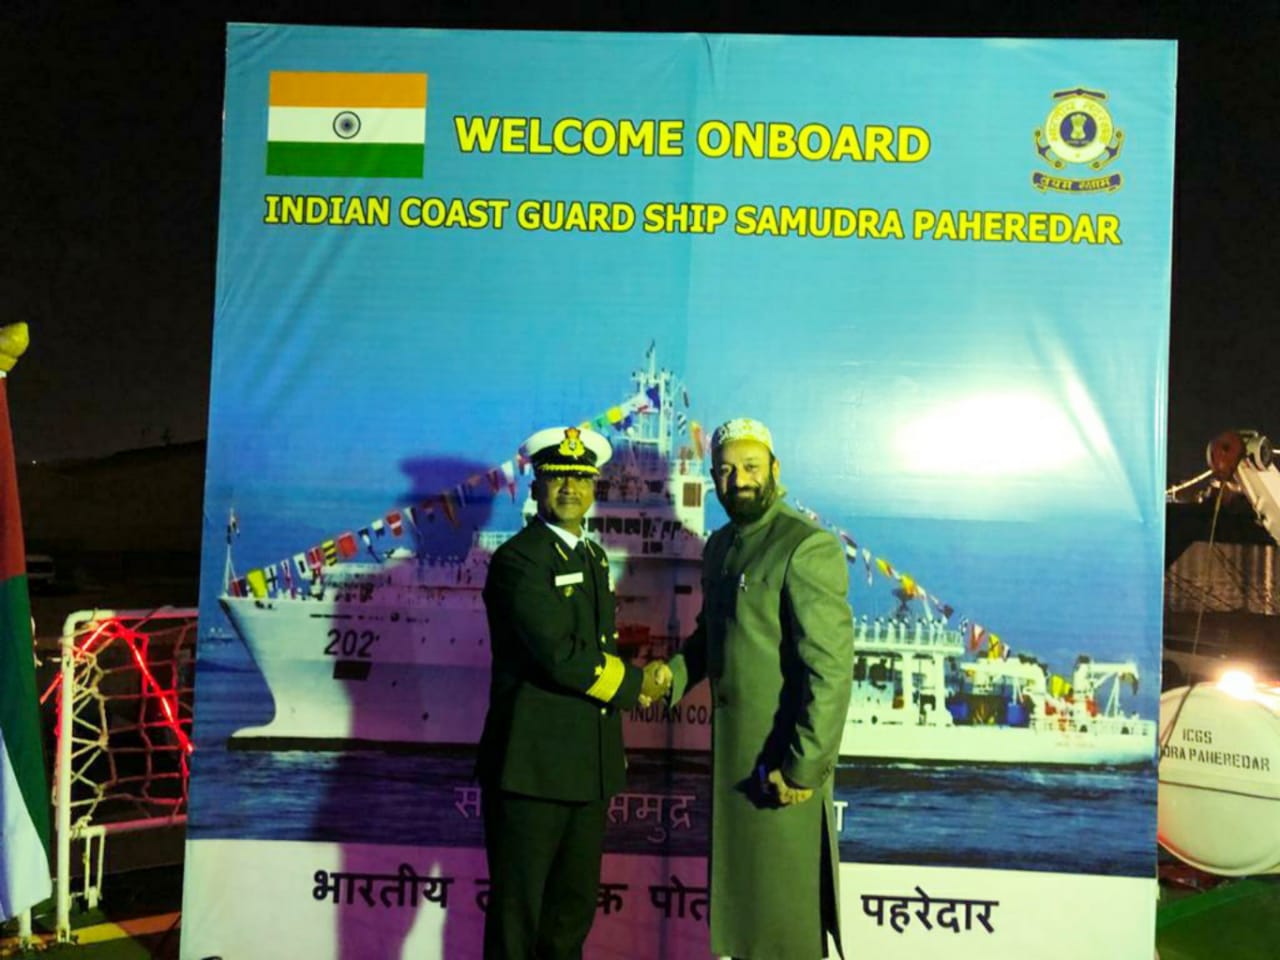 Dr.  Mustafa Saasa with Commander S Zakir Husain - Deputy Commanding Officer of Indian Coast Guard Ship - Samudra Pehredar during On Board Reception at Port Rashid, Dubai – UAE on 2nd February 2020.